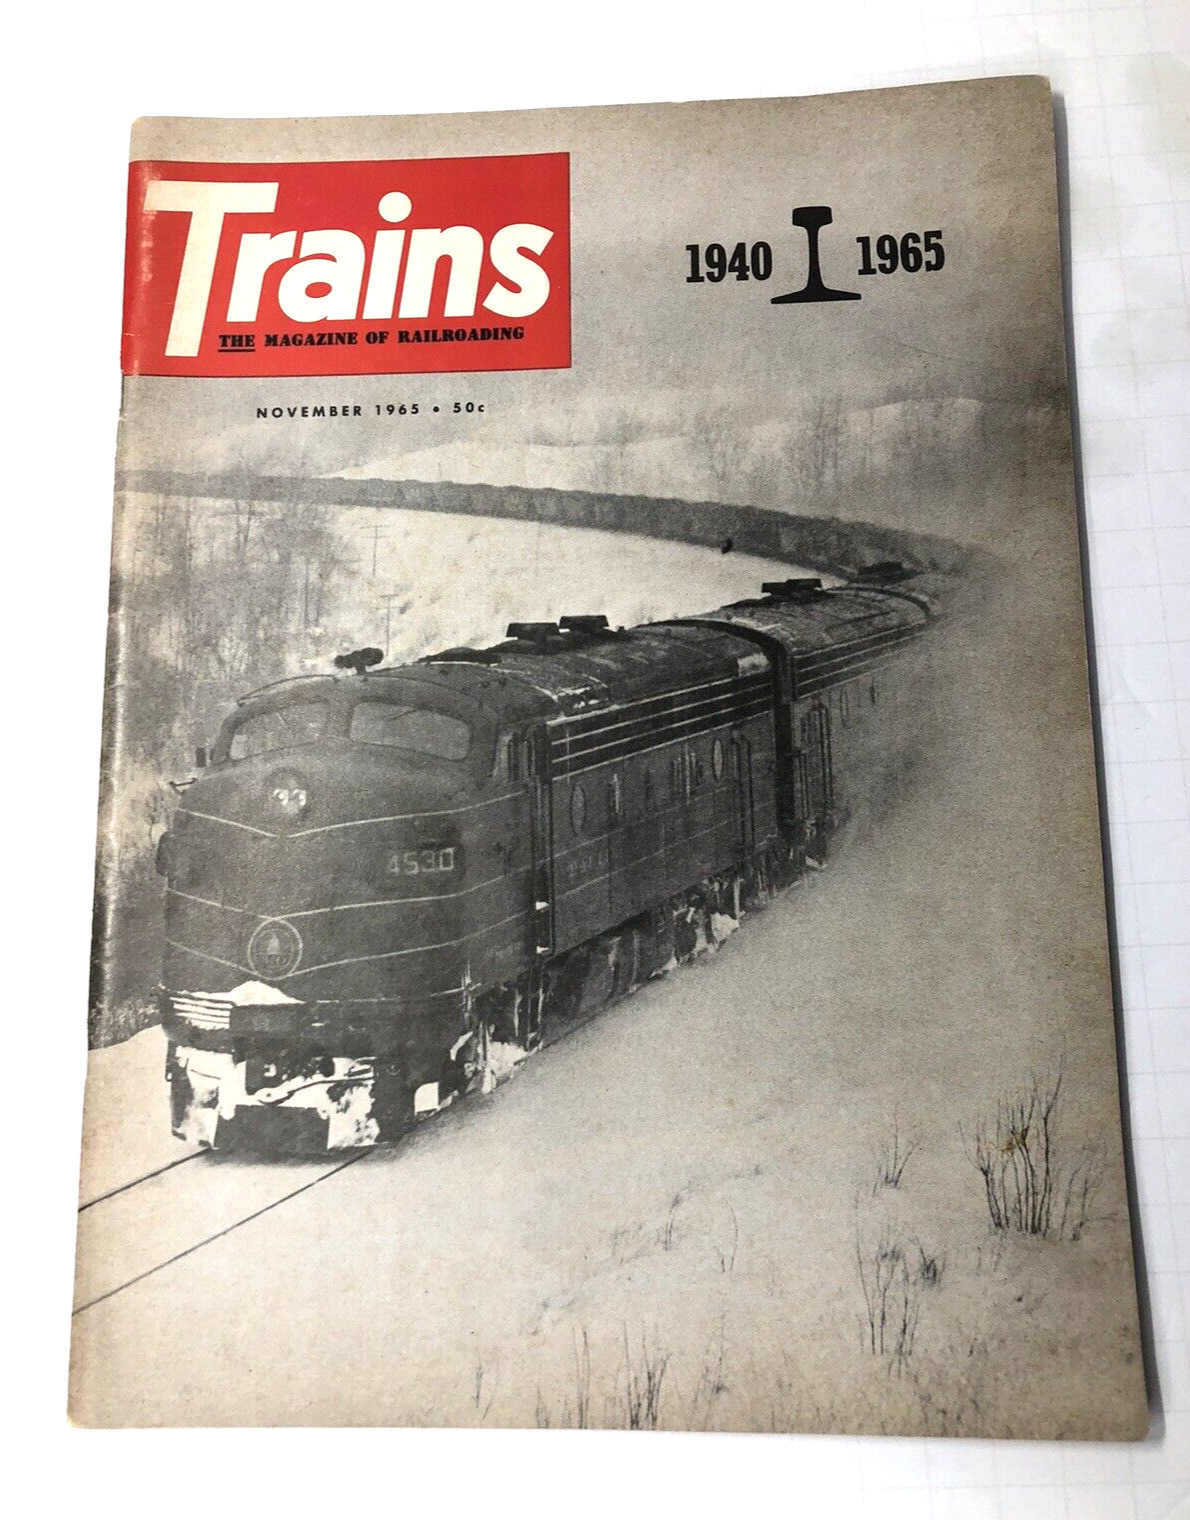 Trains The Magazine Of Railroading November 1965 - 25th Anniversary Edition